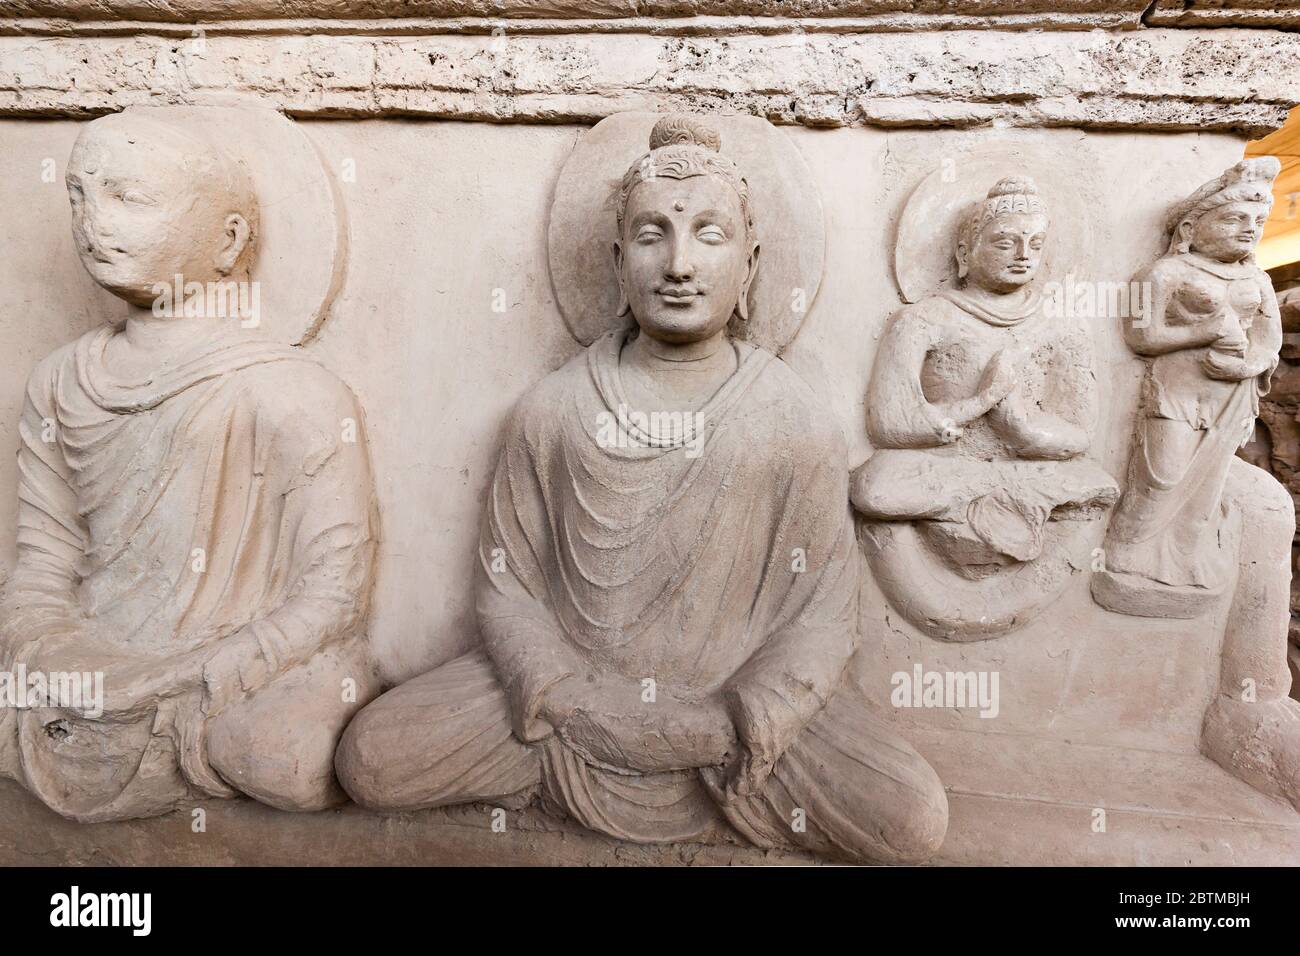 buddha-statues-of-jaulian-stupa-ancient-city-of-taxila-jaulian-haripur-district-khyber-pakhtun...jpg